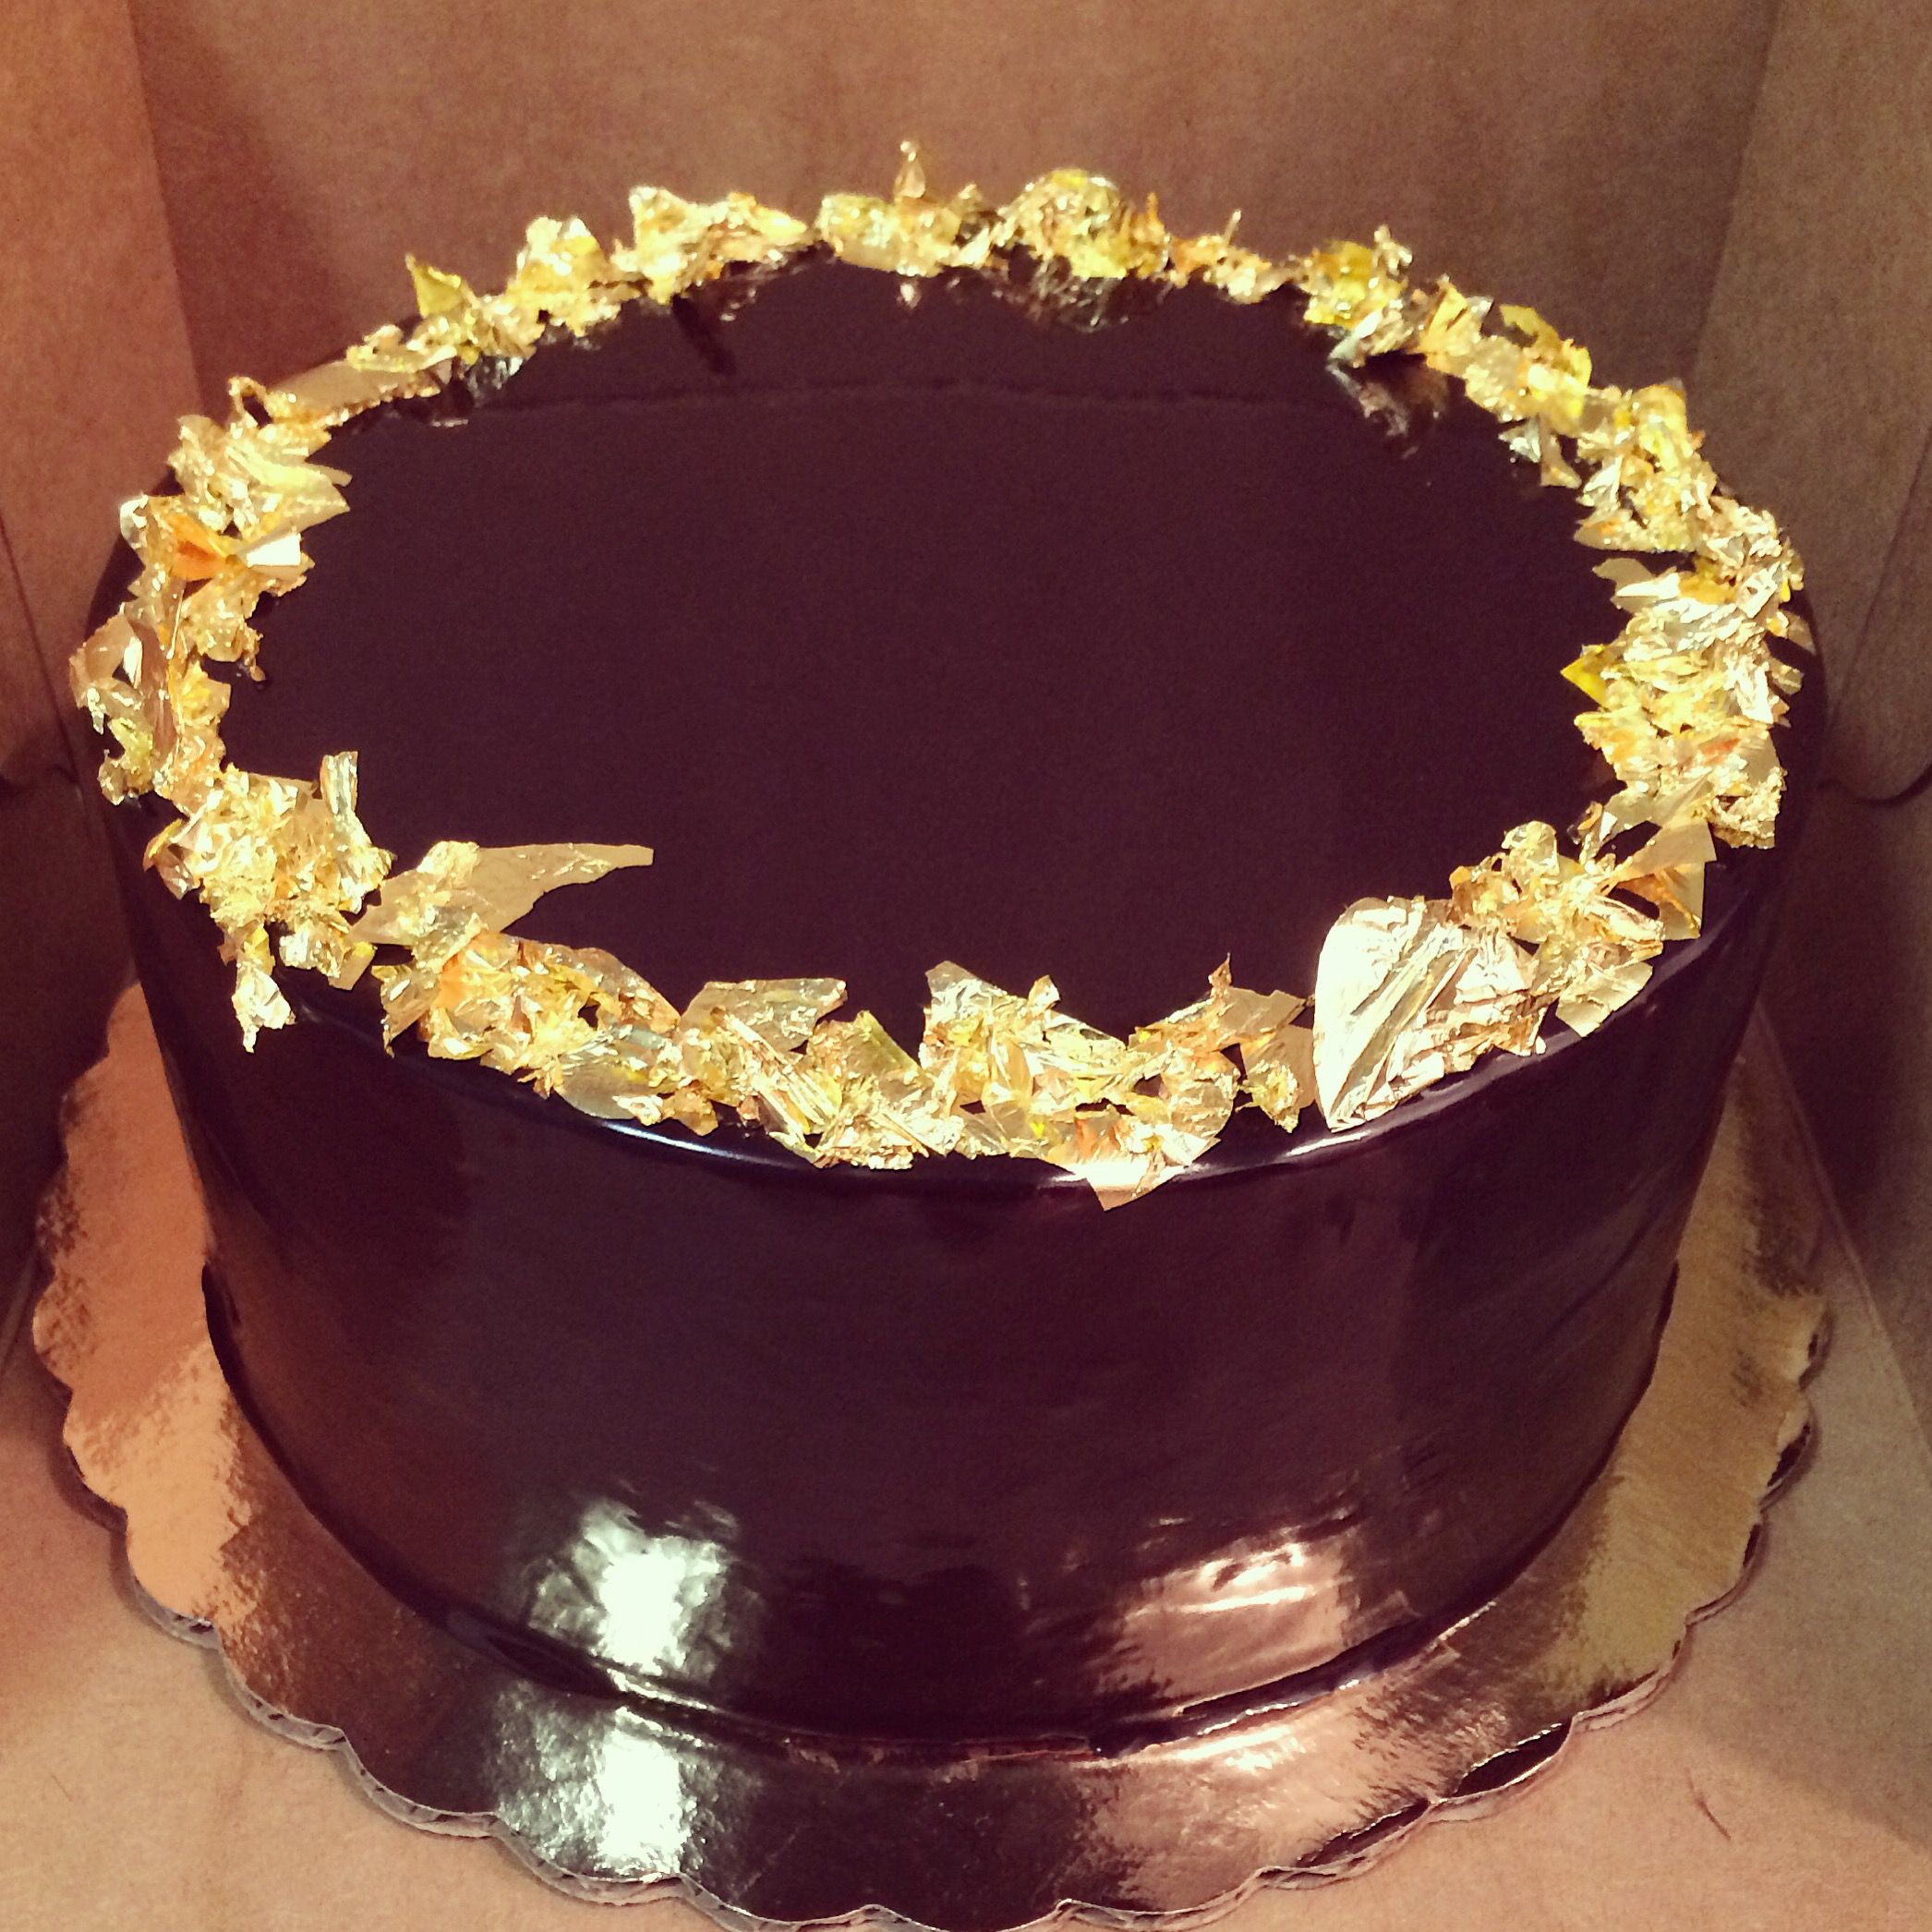 Chocolate Cake finished with a dark chocolate glaze and a ...